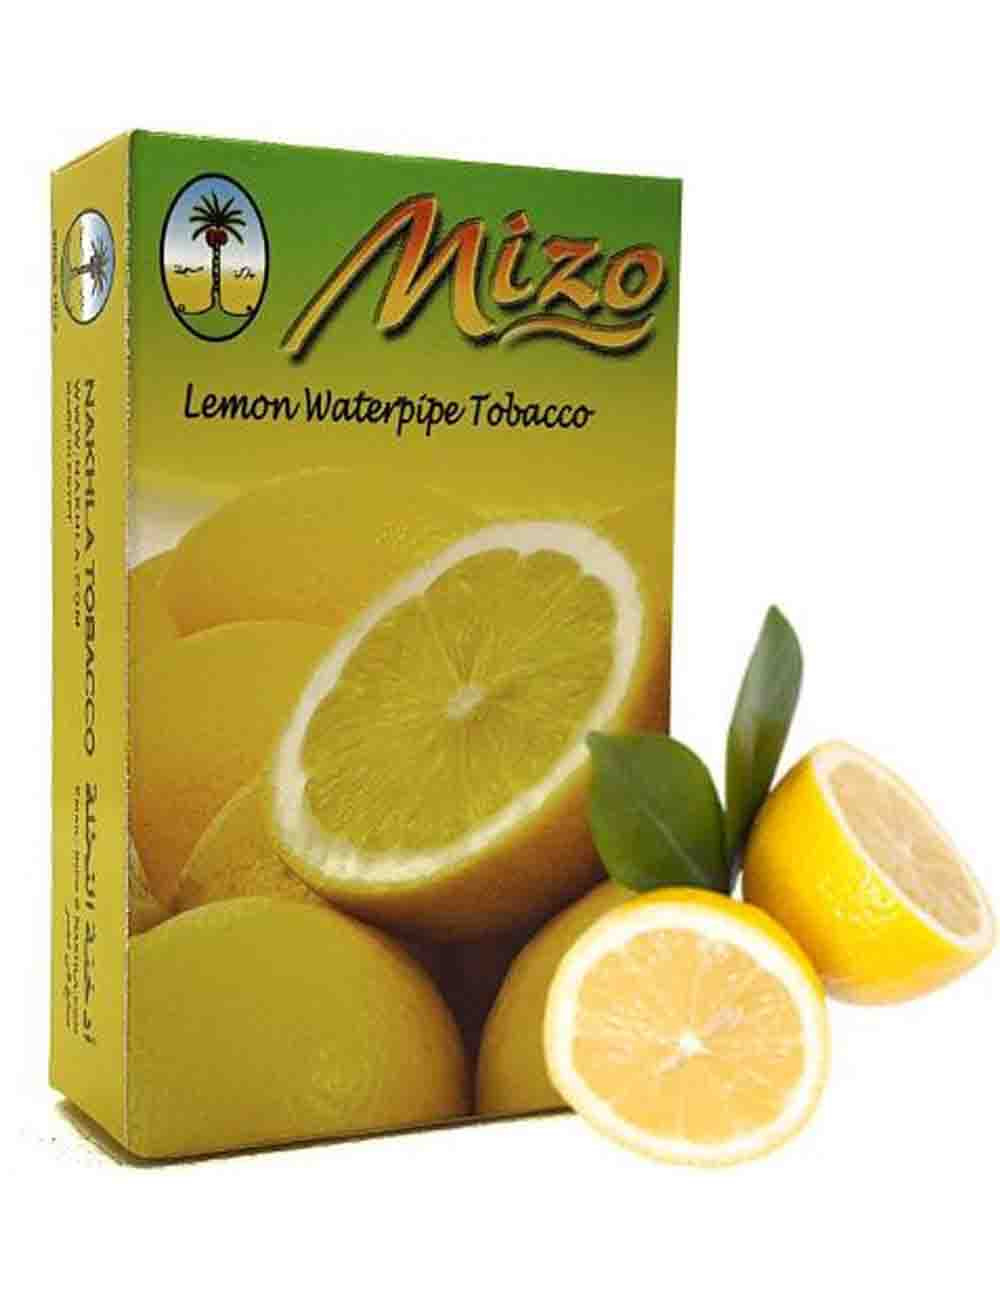 Mizo Lemon